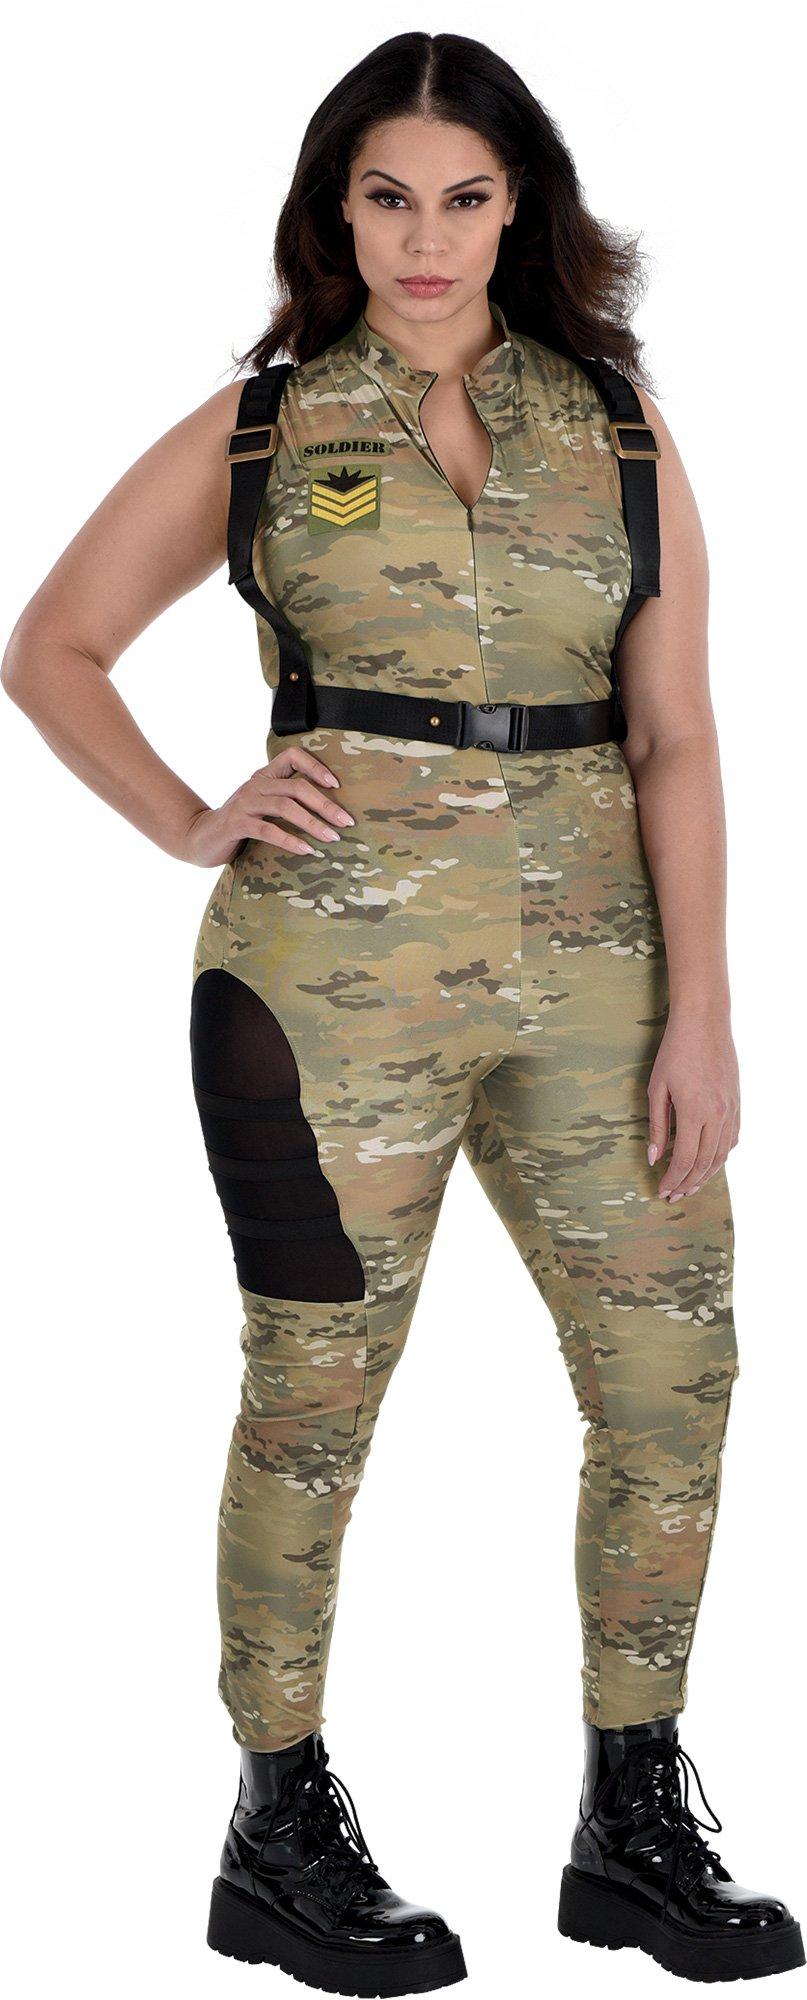 Adult Soldier Plus Size Catsuit Costume